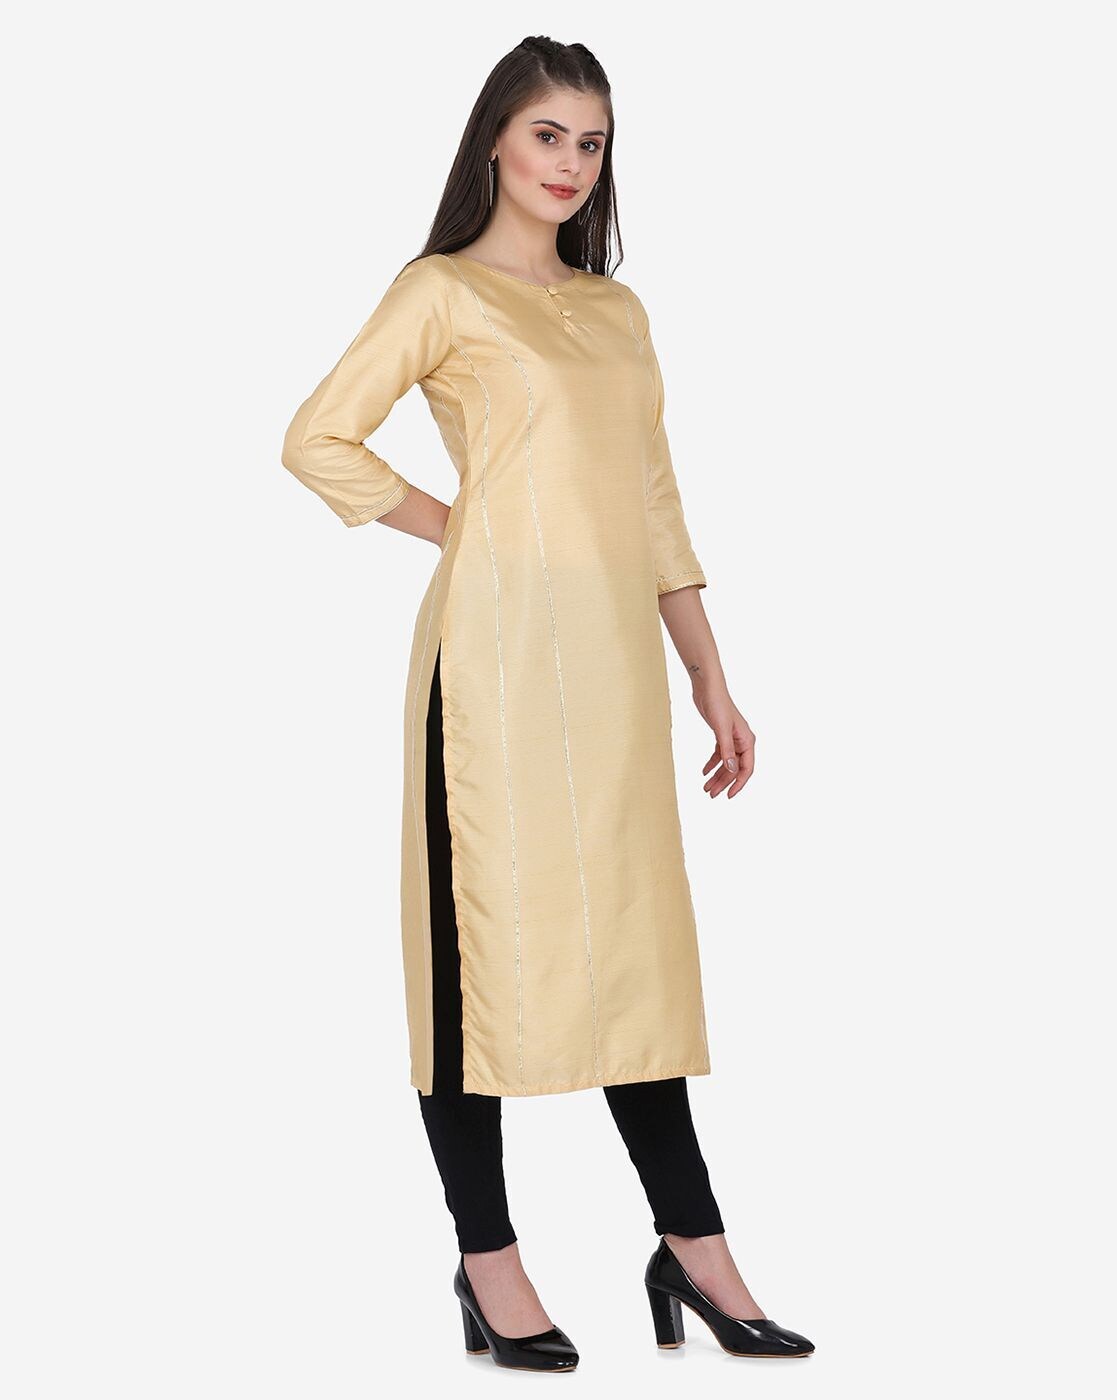 Popular $39 - $52 - Cream Silk Kurti and Cream Silk Tunic Online Shopping